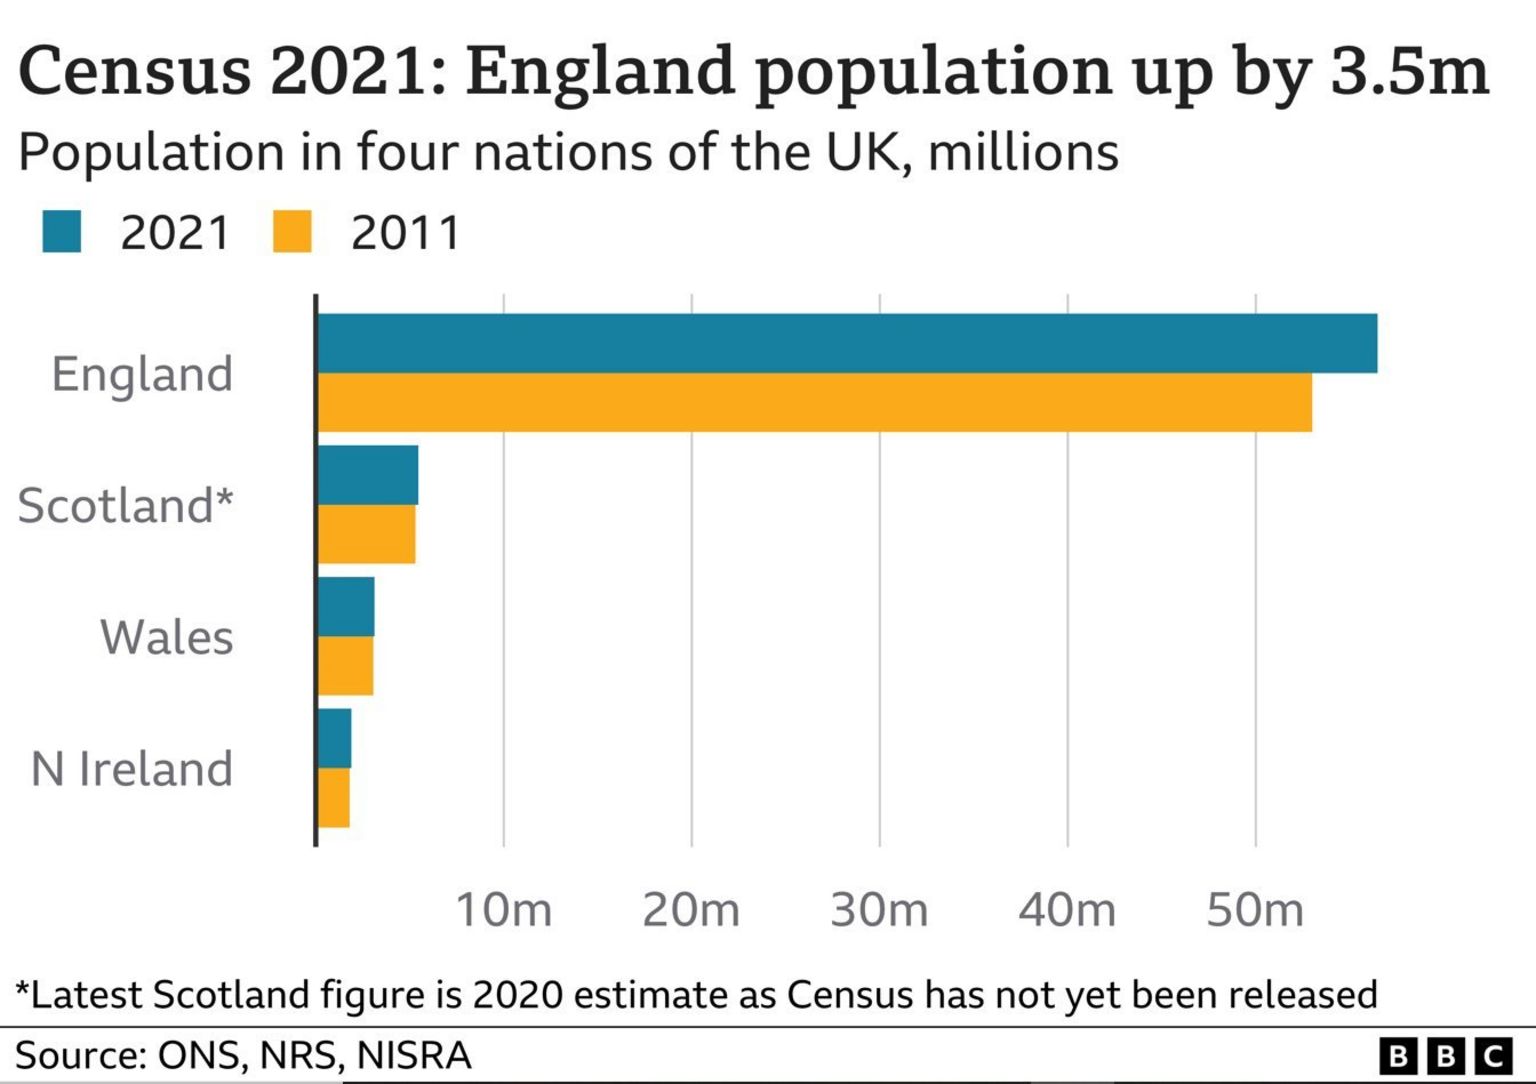 England population growth